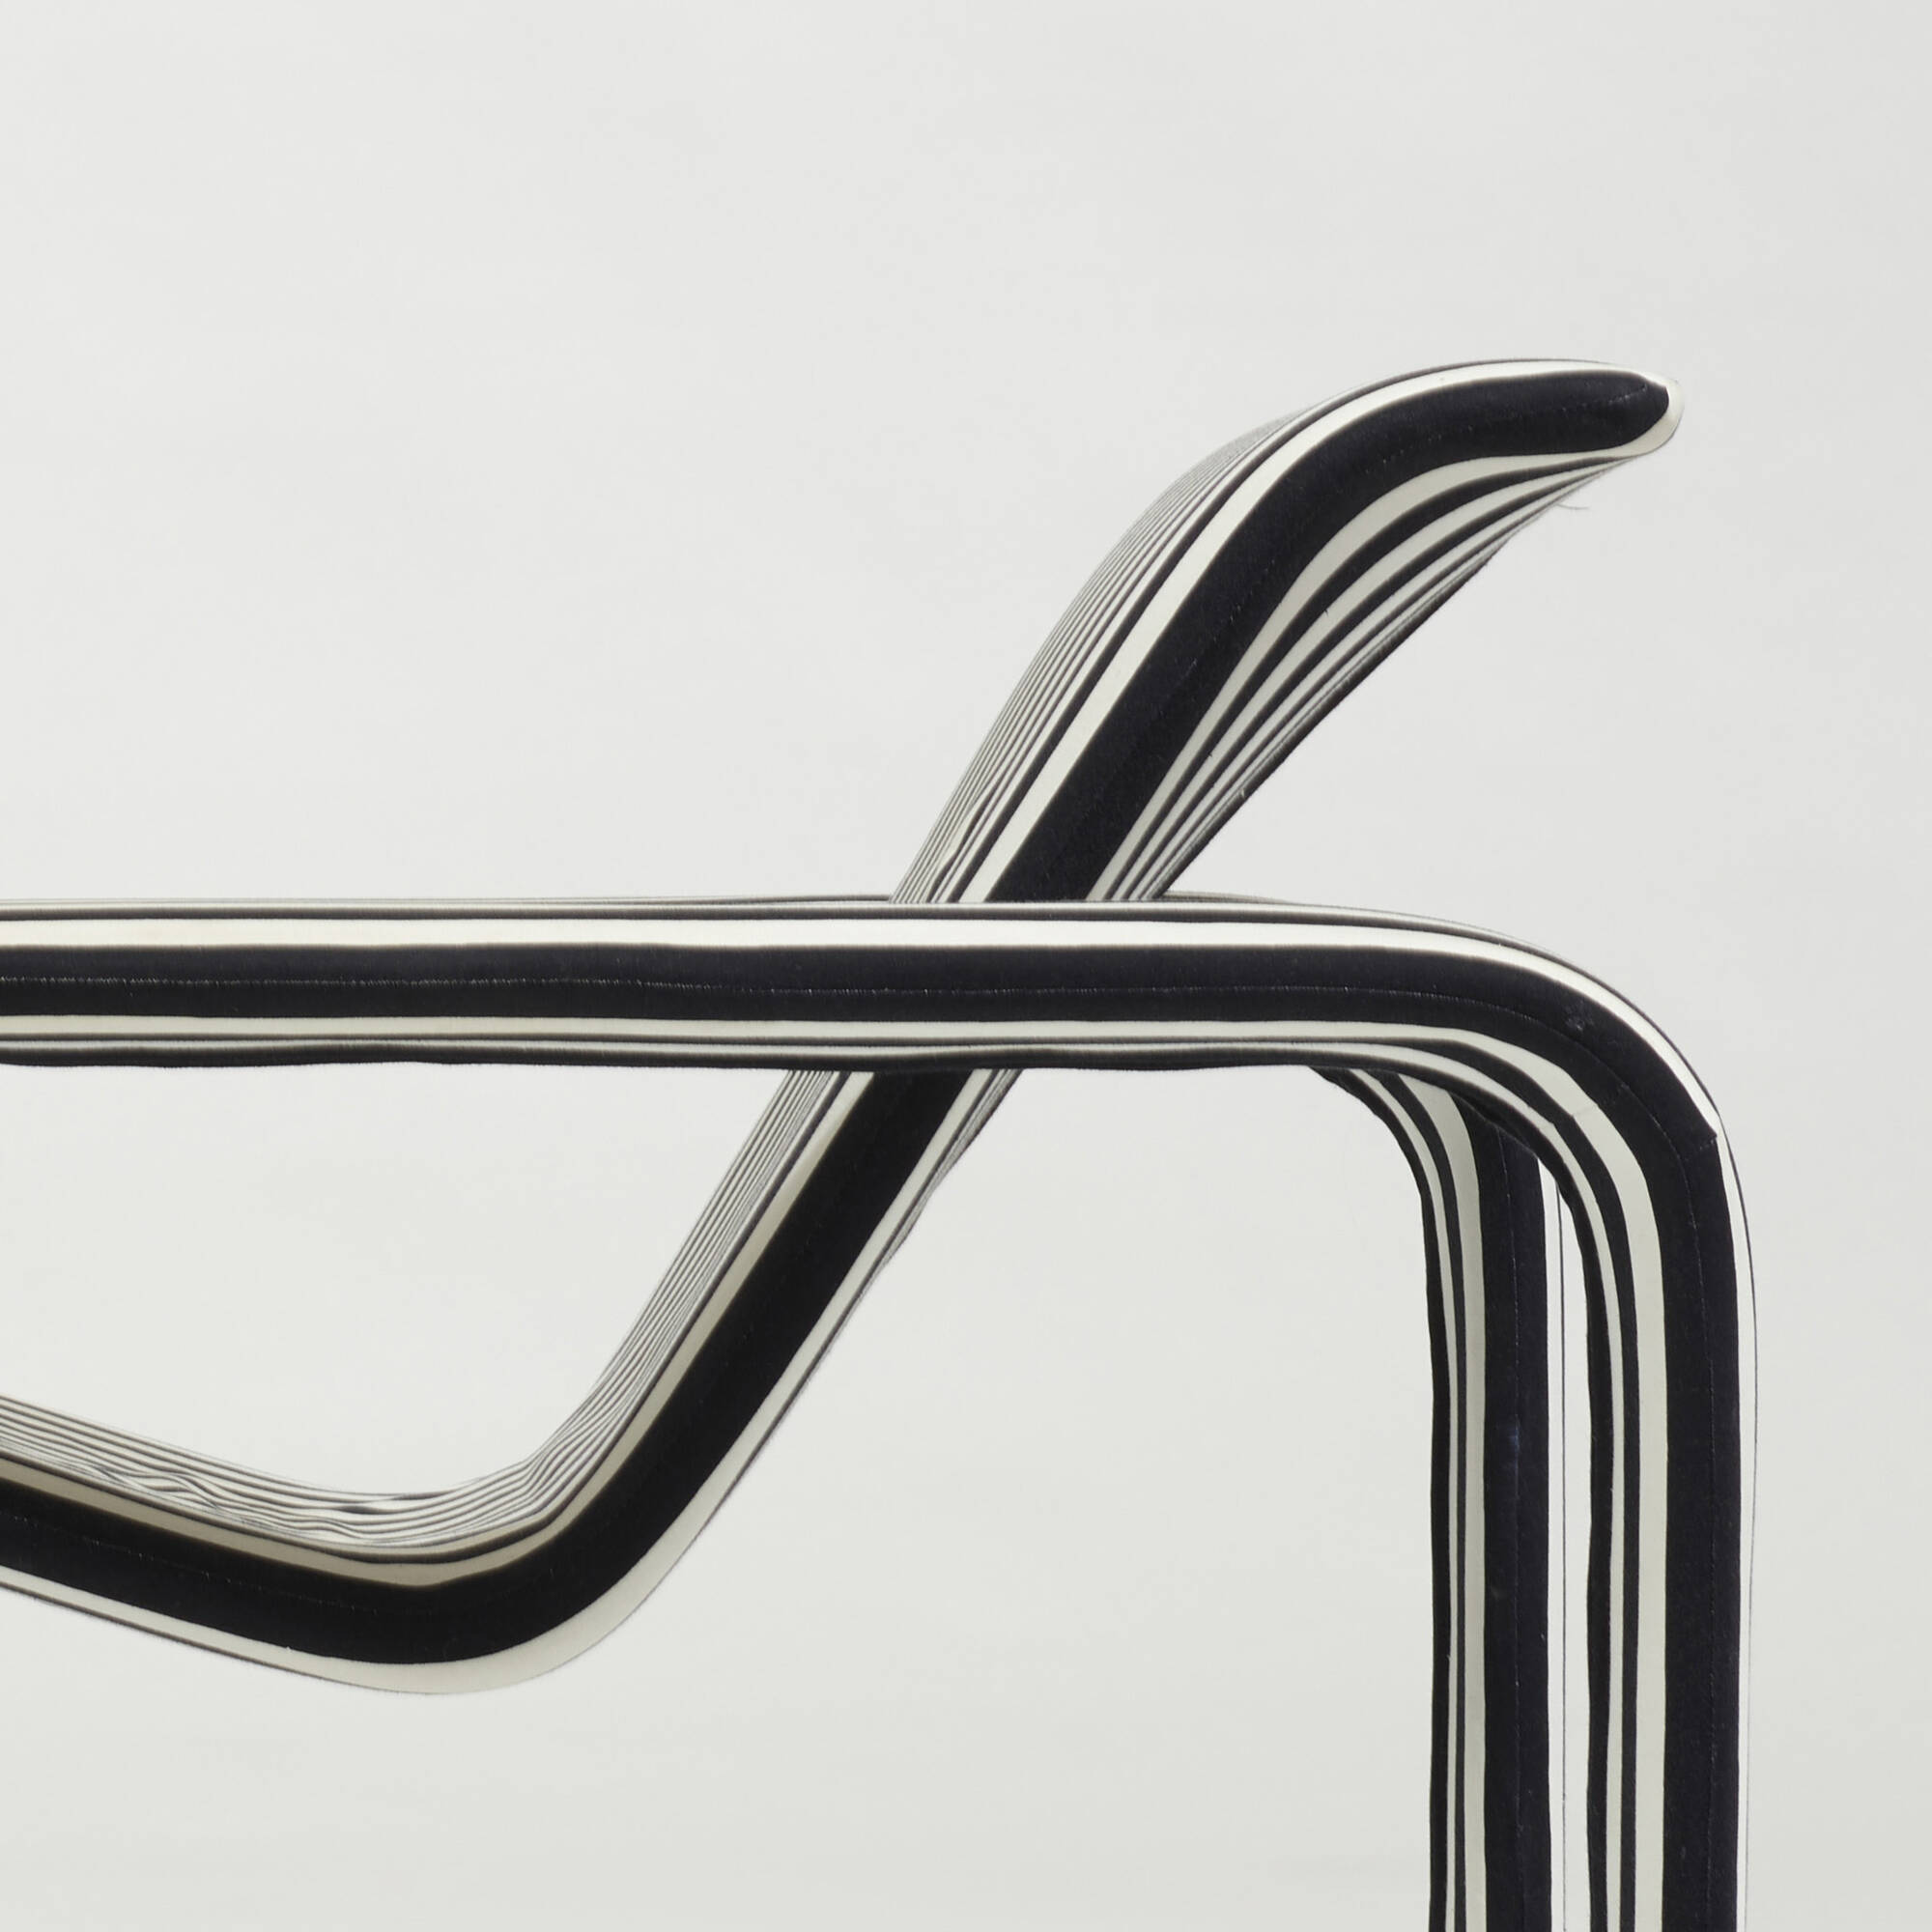 337: ANTTI AND VUOKKO NURMESNIEMI, 004 Lounge chair < Scandinavian Design,  23 November 2021 < Auctions | Wright: Auctions of Art and Design